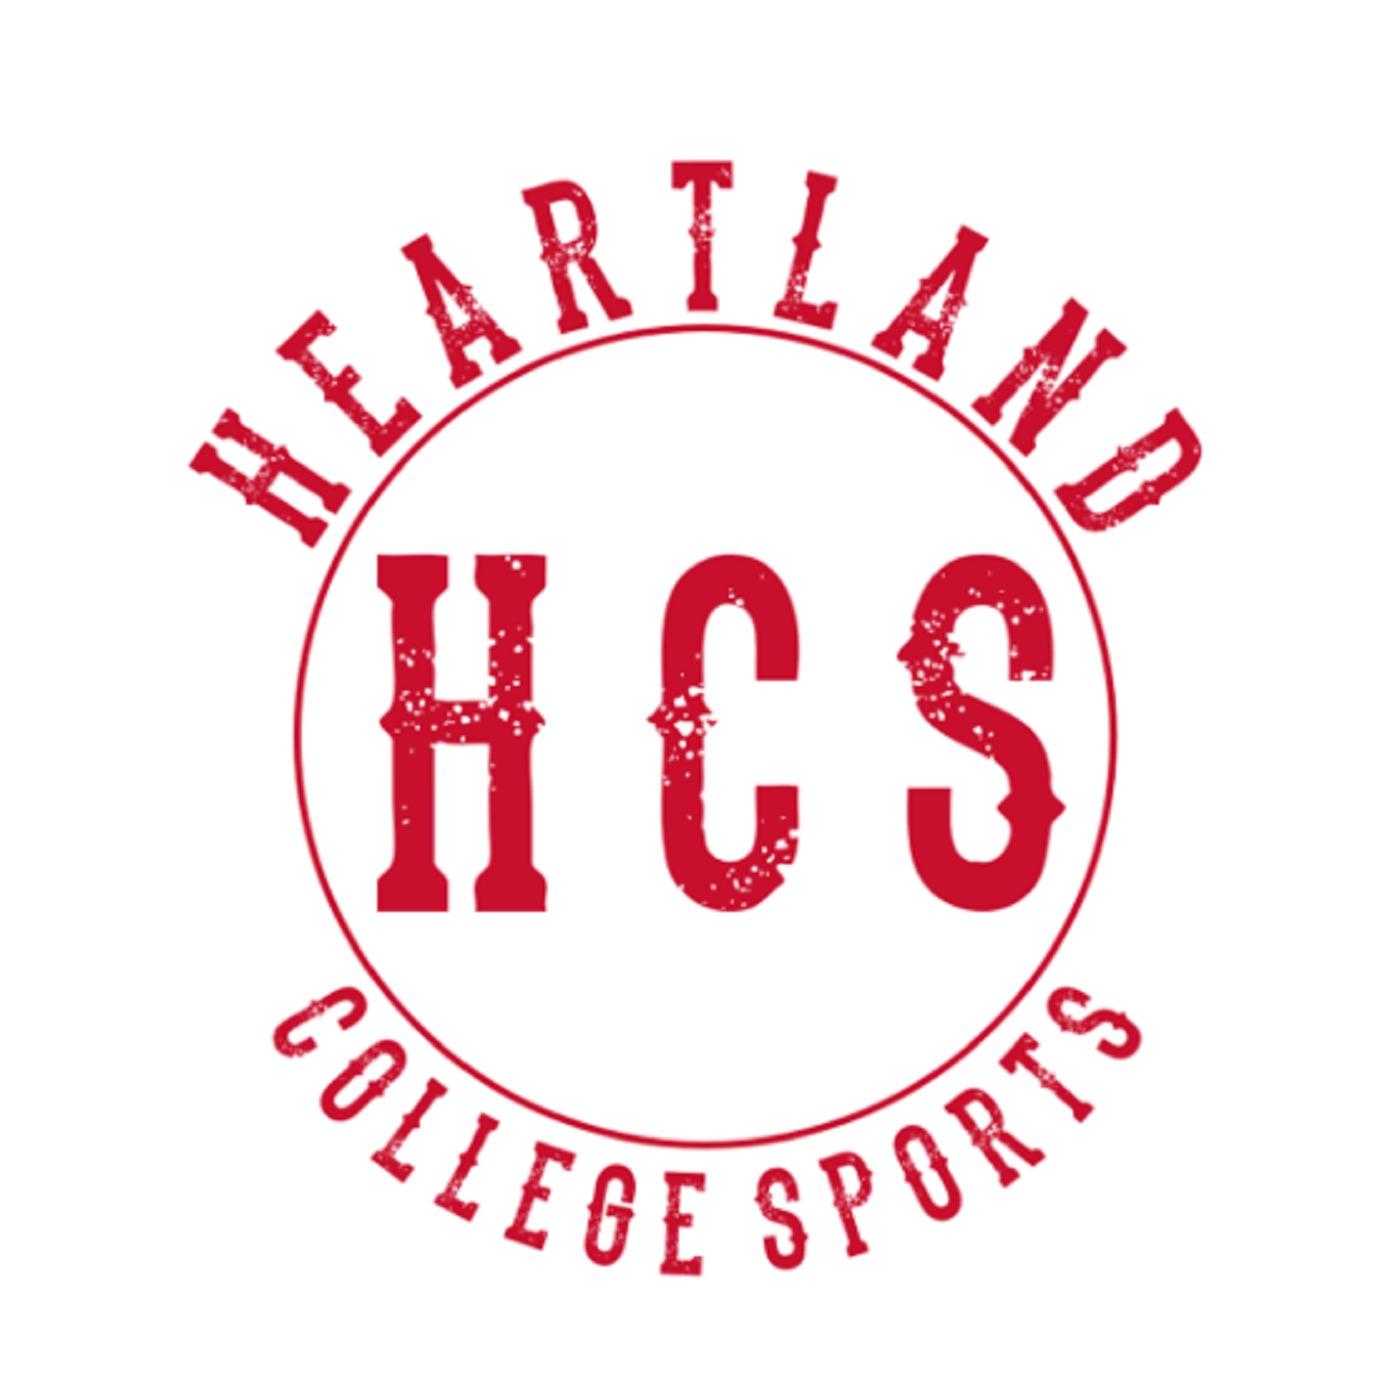 Heartland College Sports: Big 12 College Football Podcast